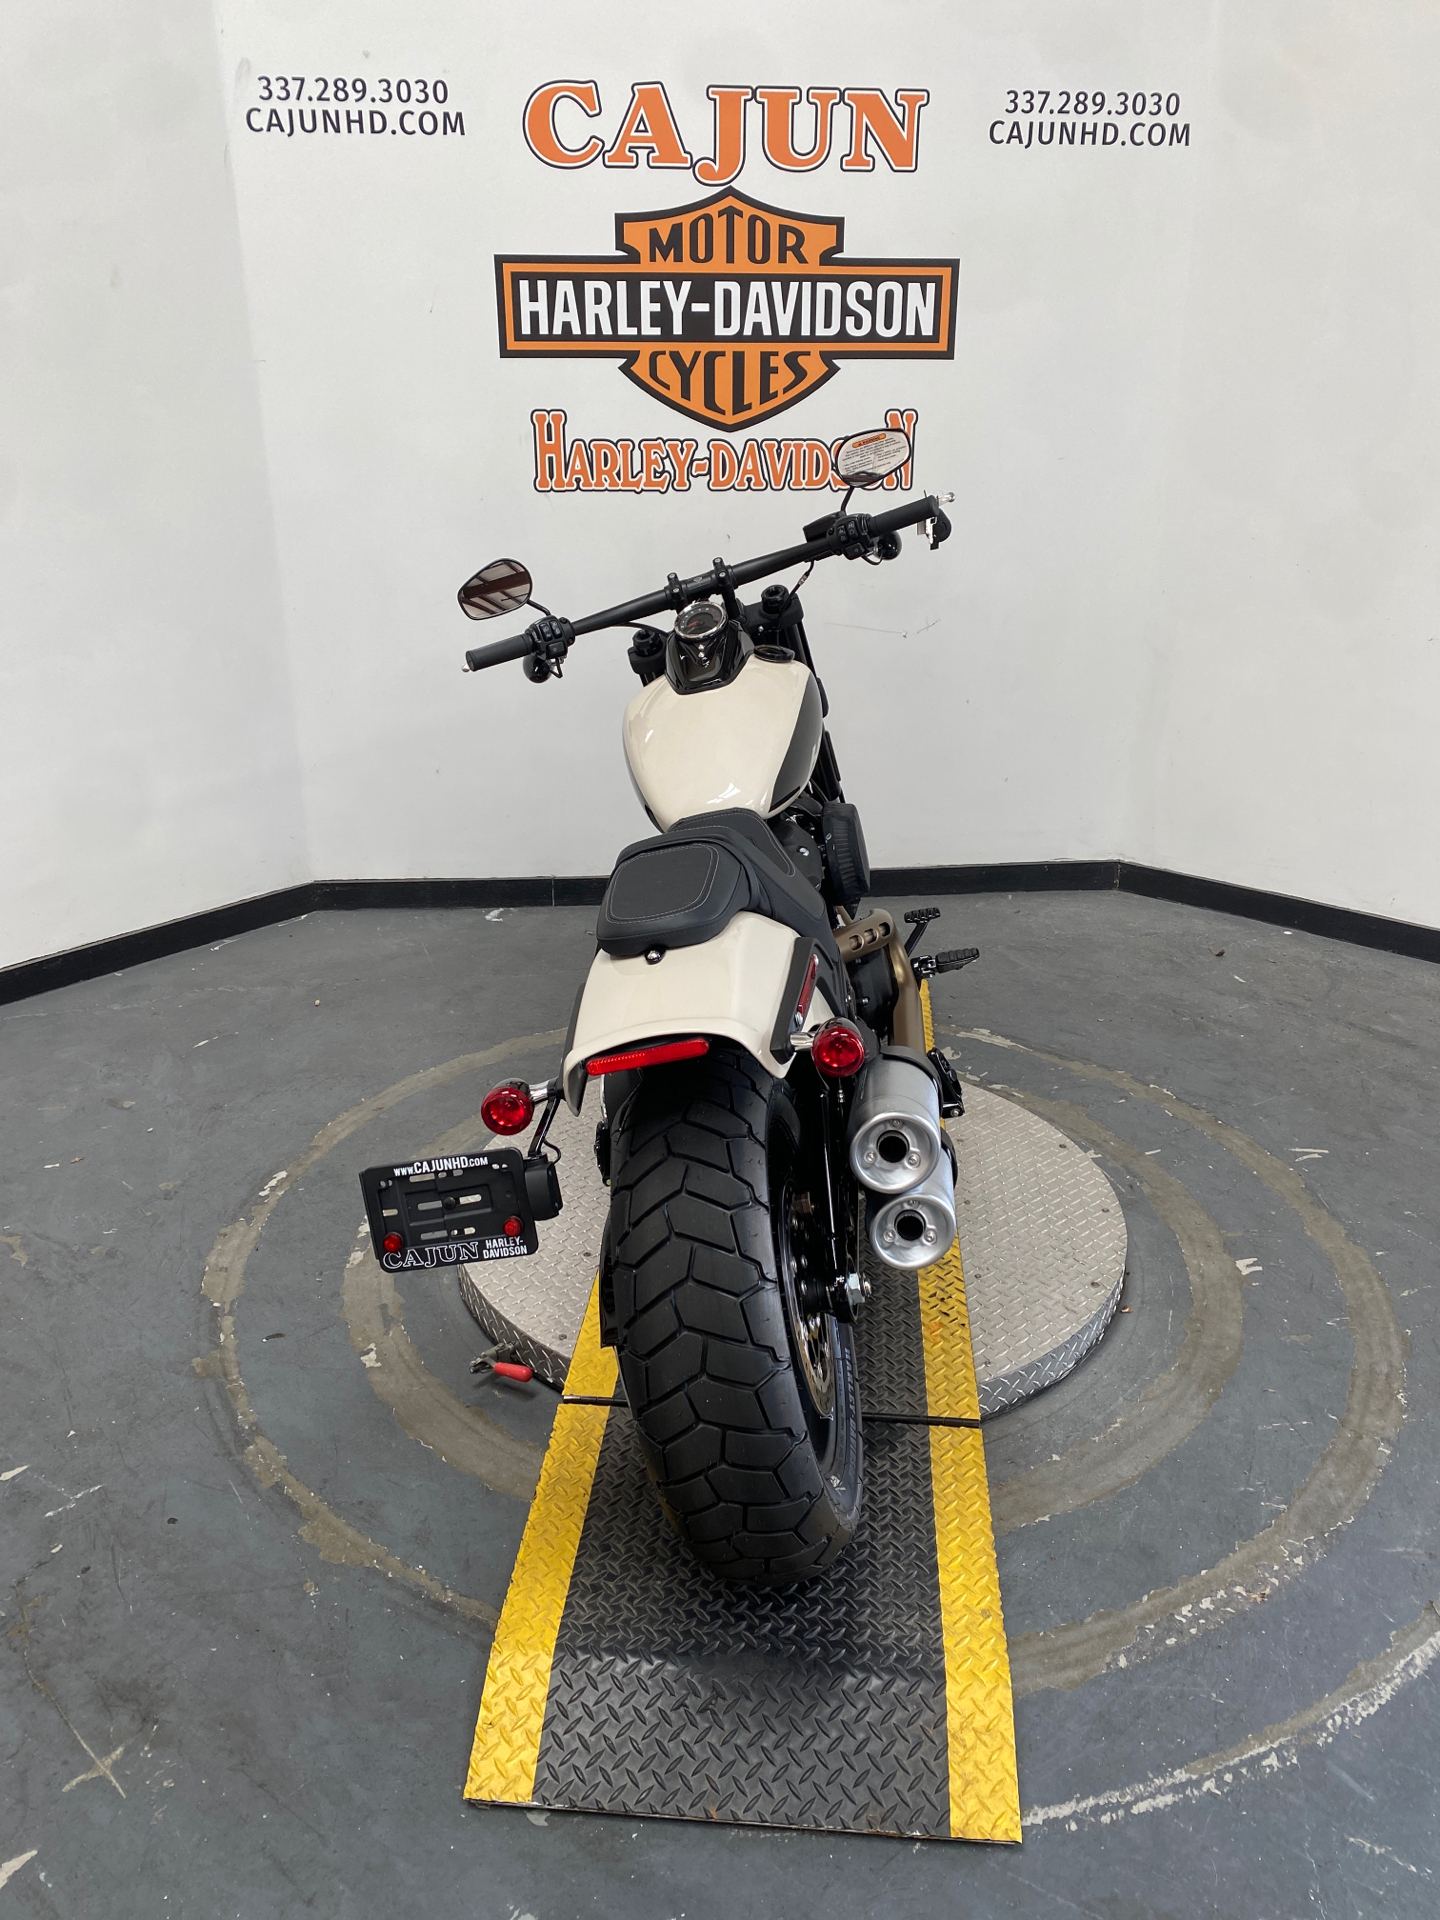 2022 Harley-Davidson Fat Bob nesr me - Photo 7